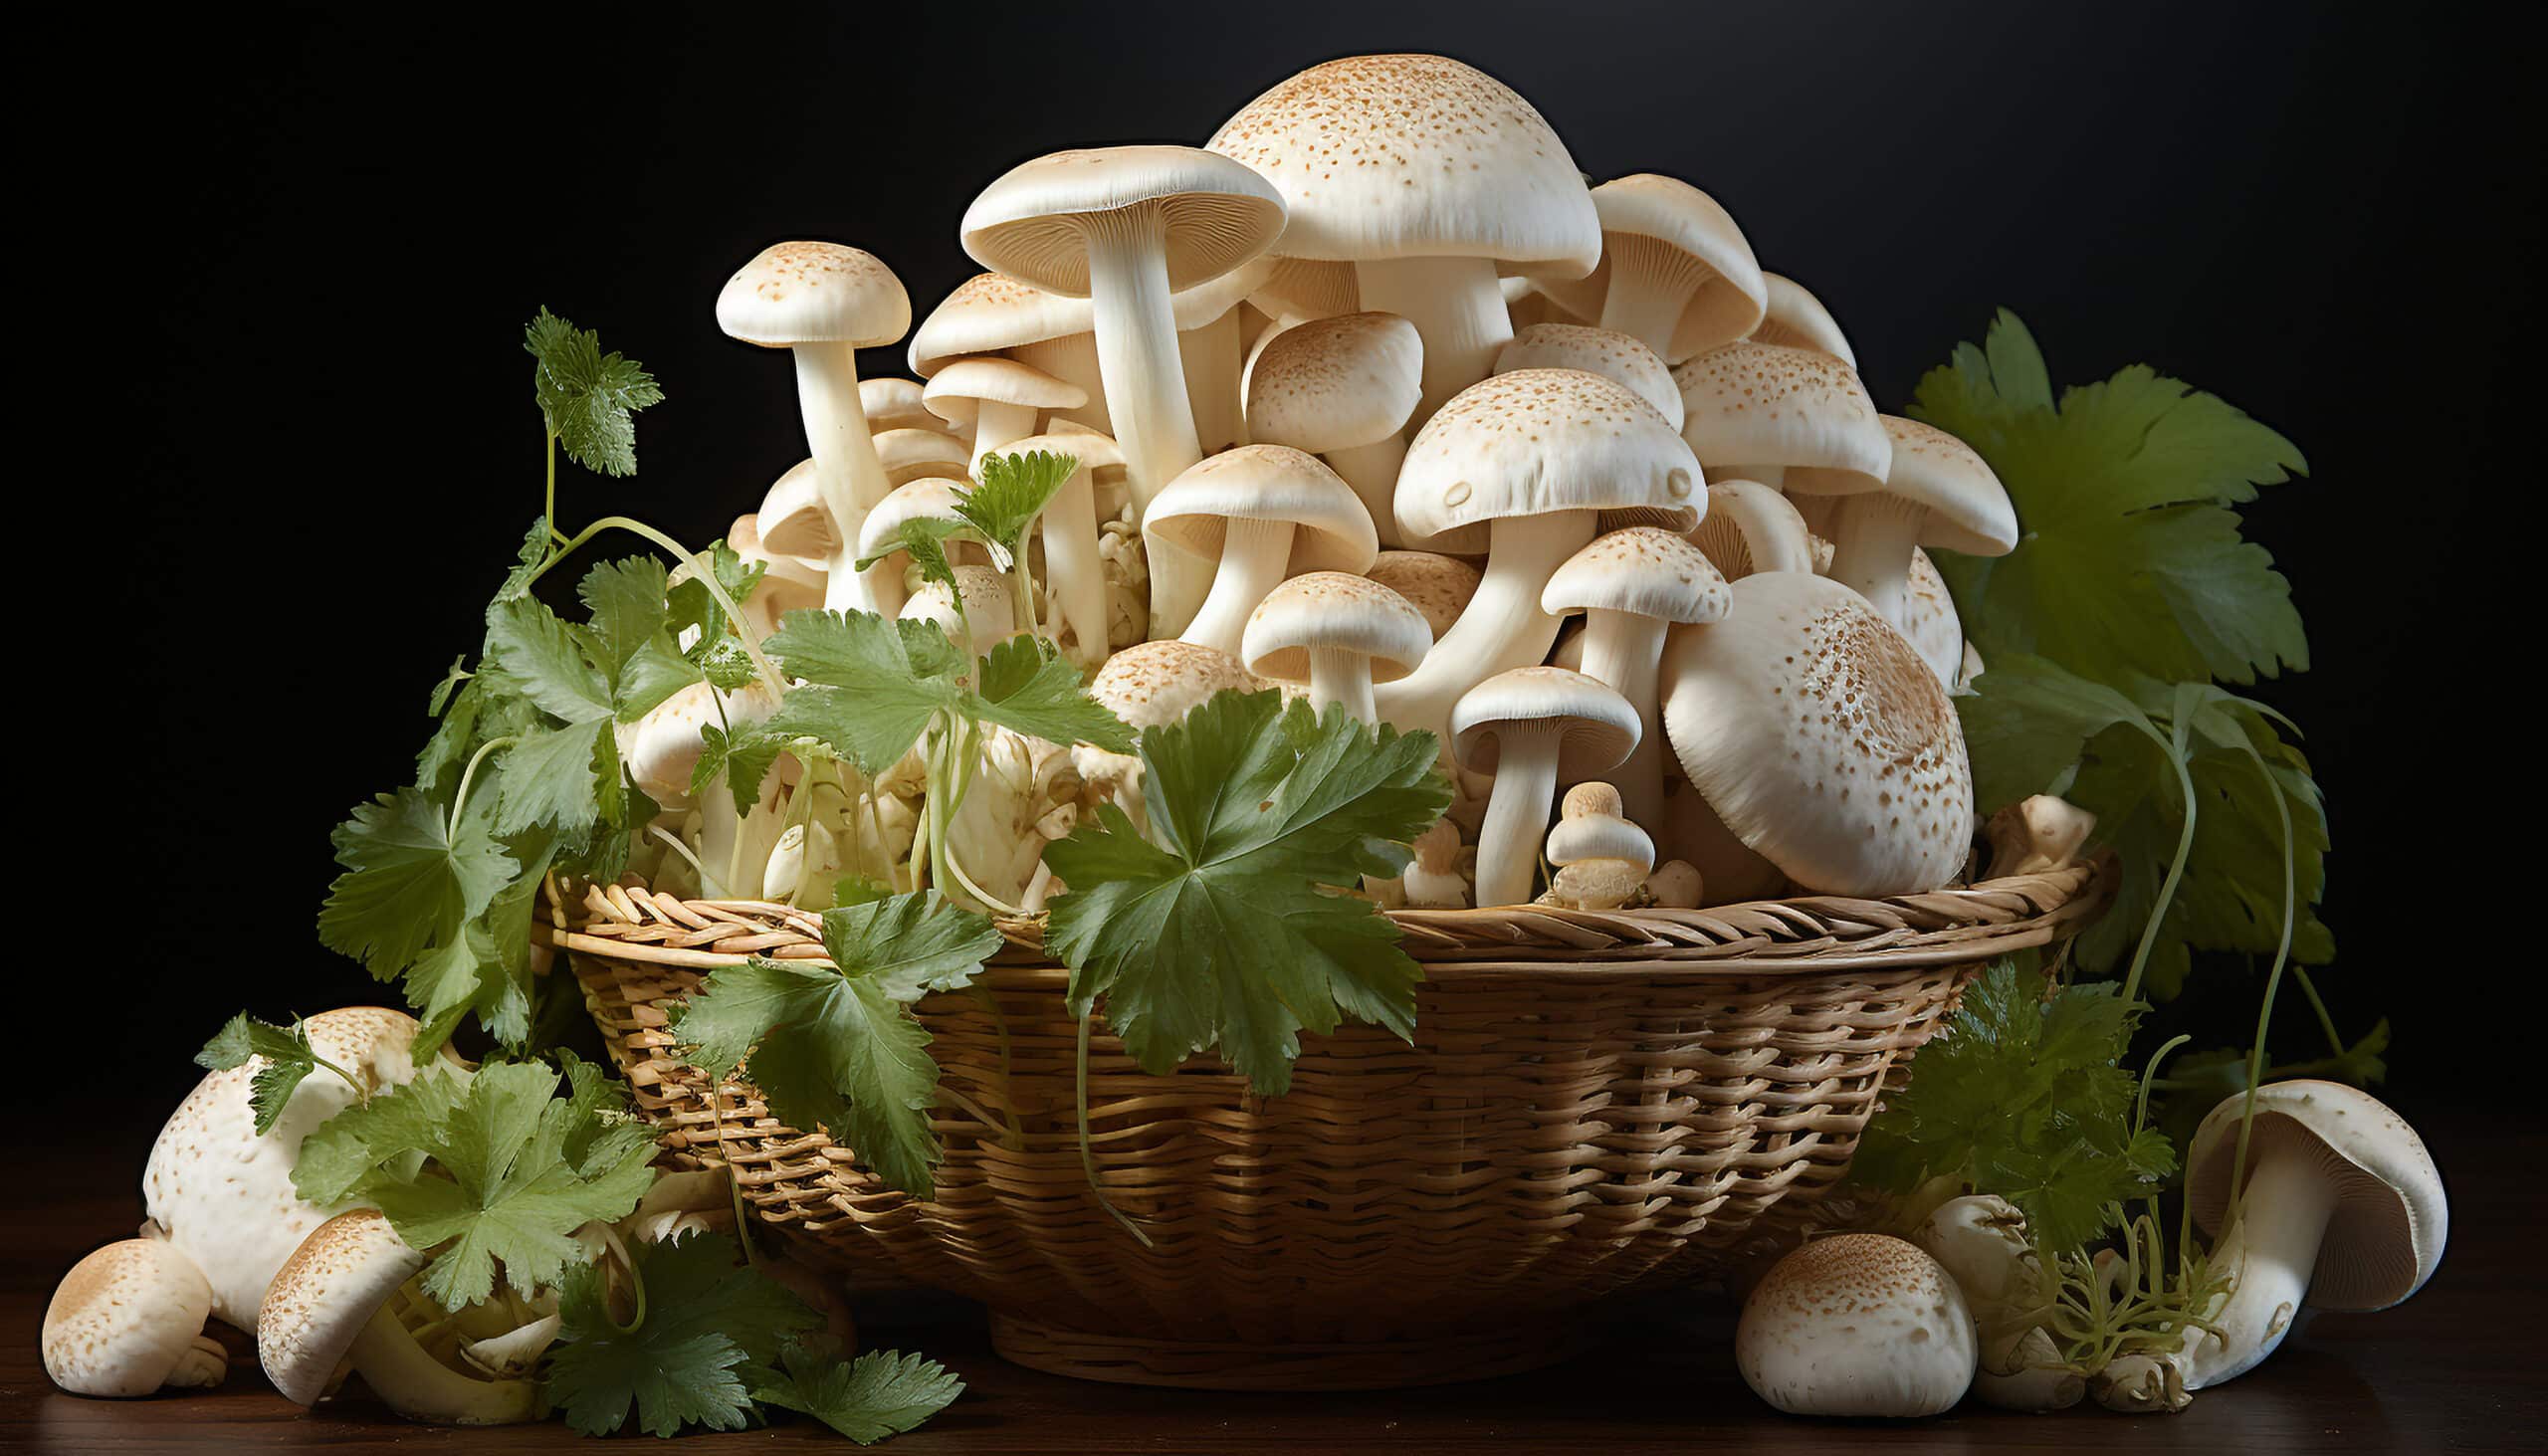 growmyownhealthfood.com : Are yard-grown mushrooms safe to consume?